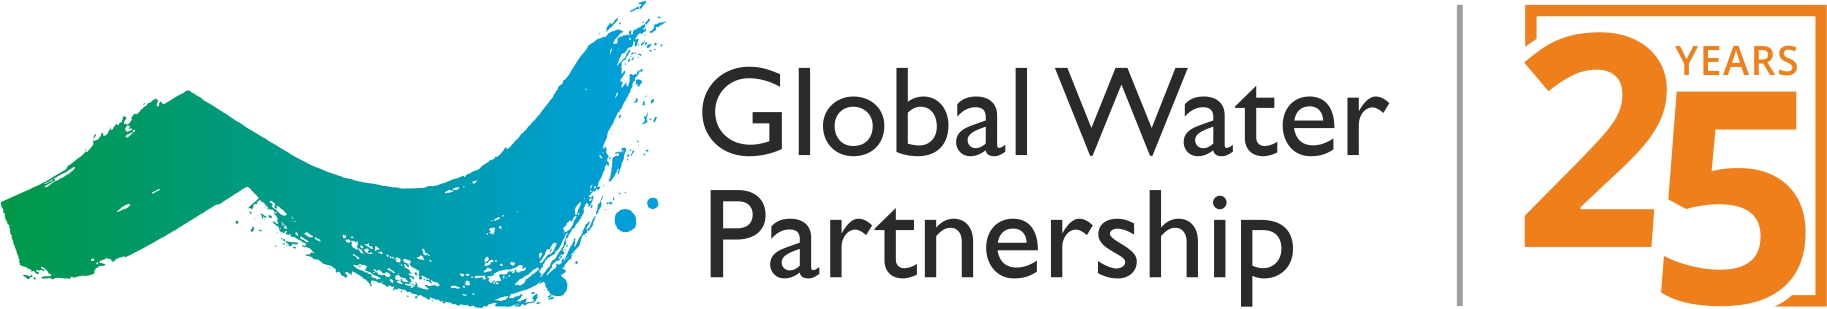 GWP anniversary logo